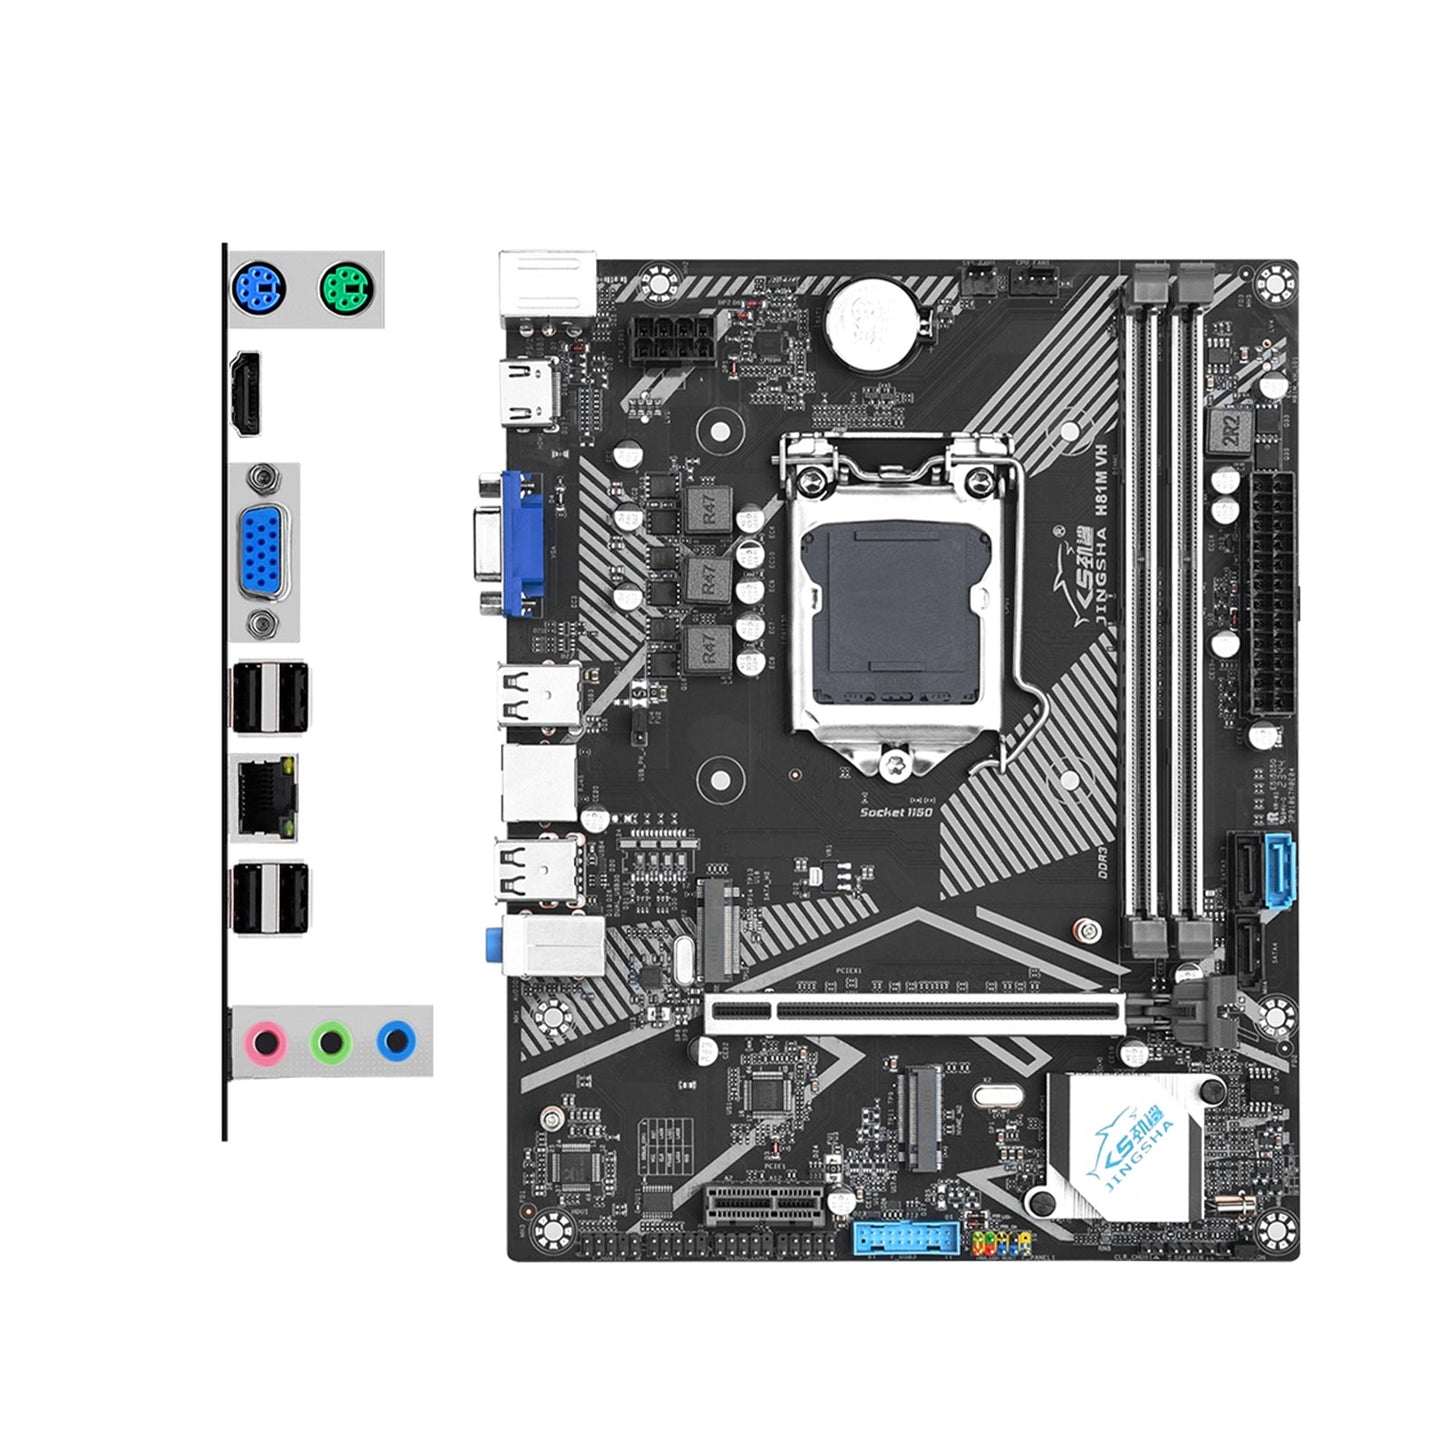 H81M VH Computer Motherboard Desktop DDR3 Memory LGA 1150-pin supports M.2